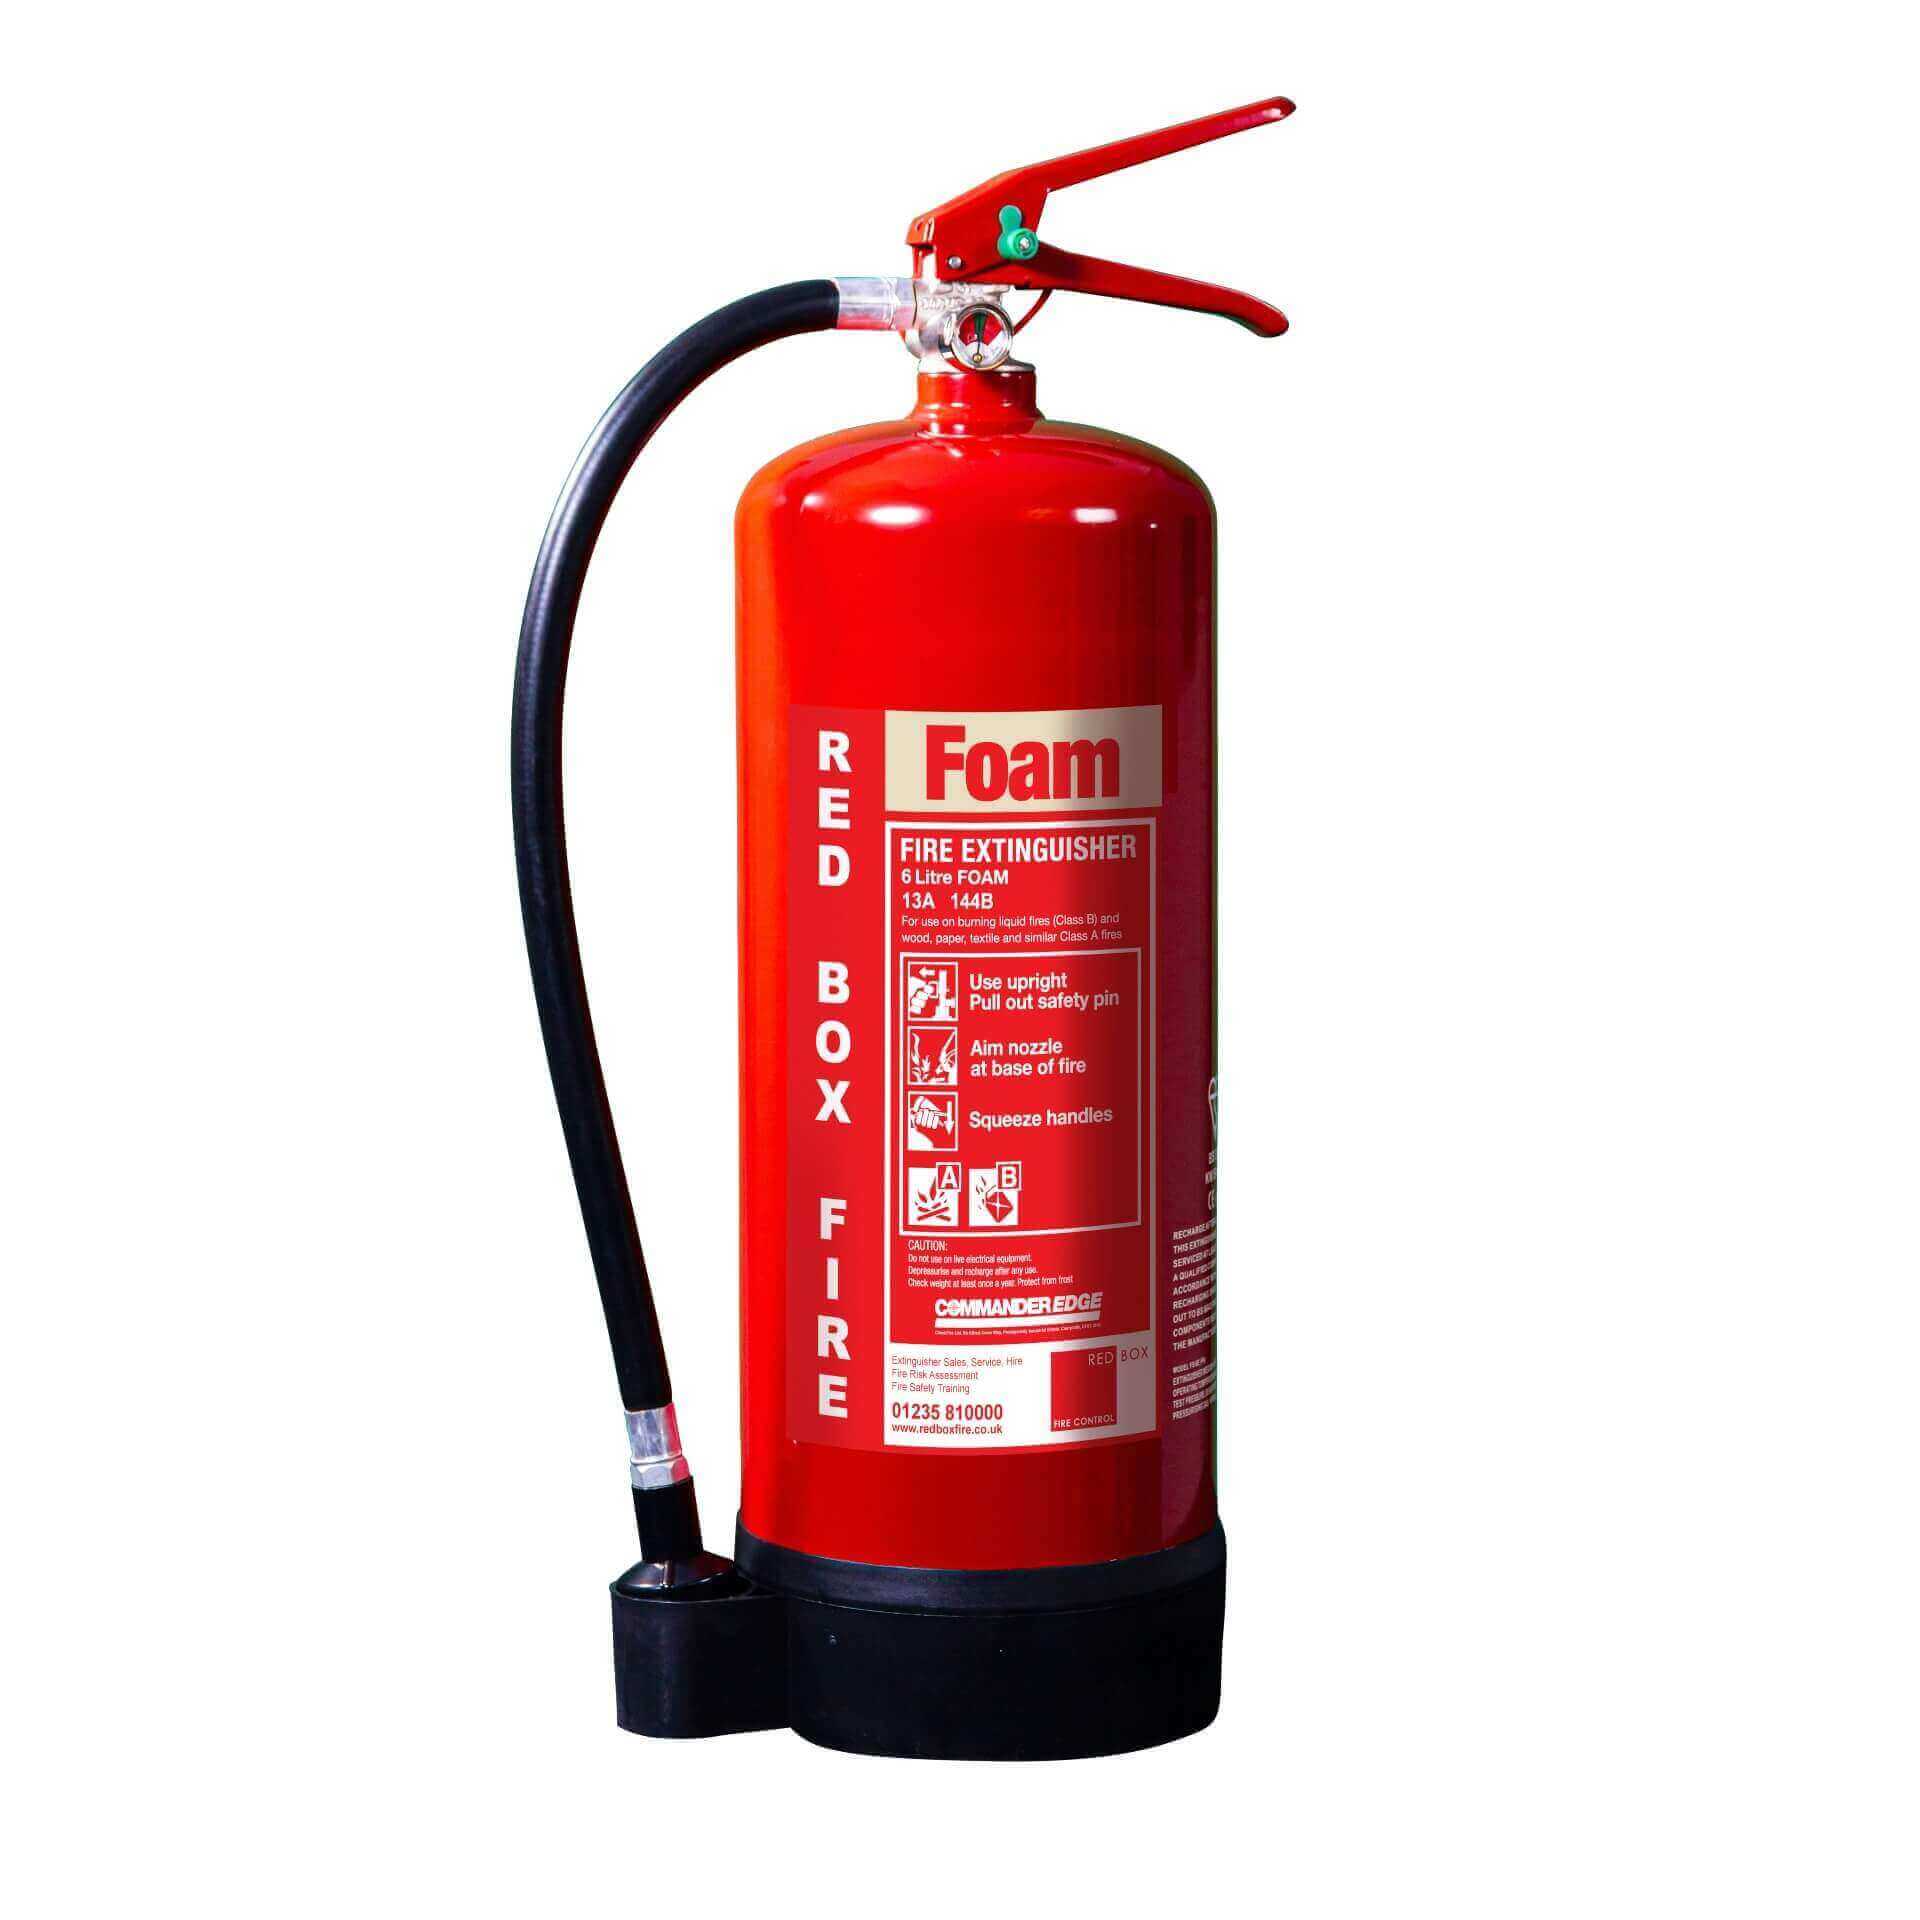 Foamspray 6 Litre Extinguisher 2020